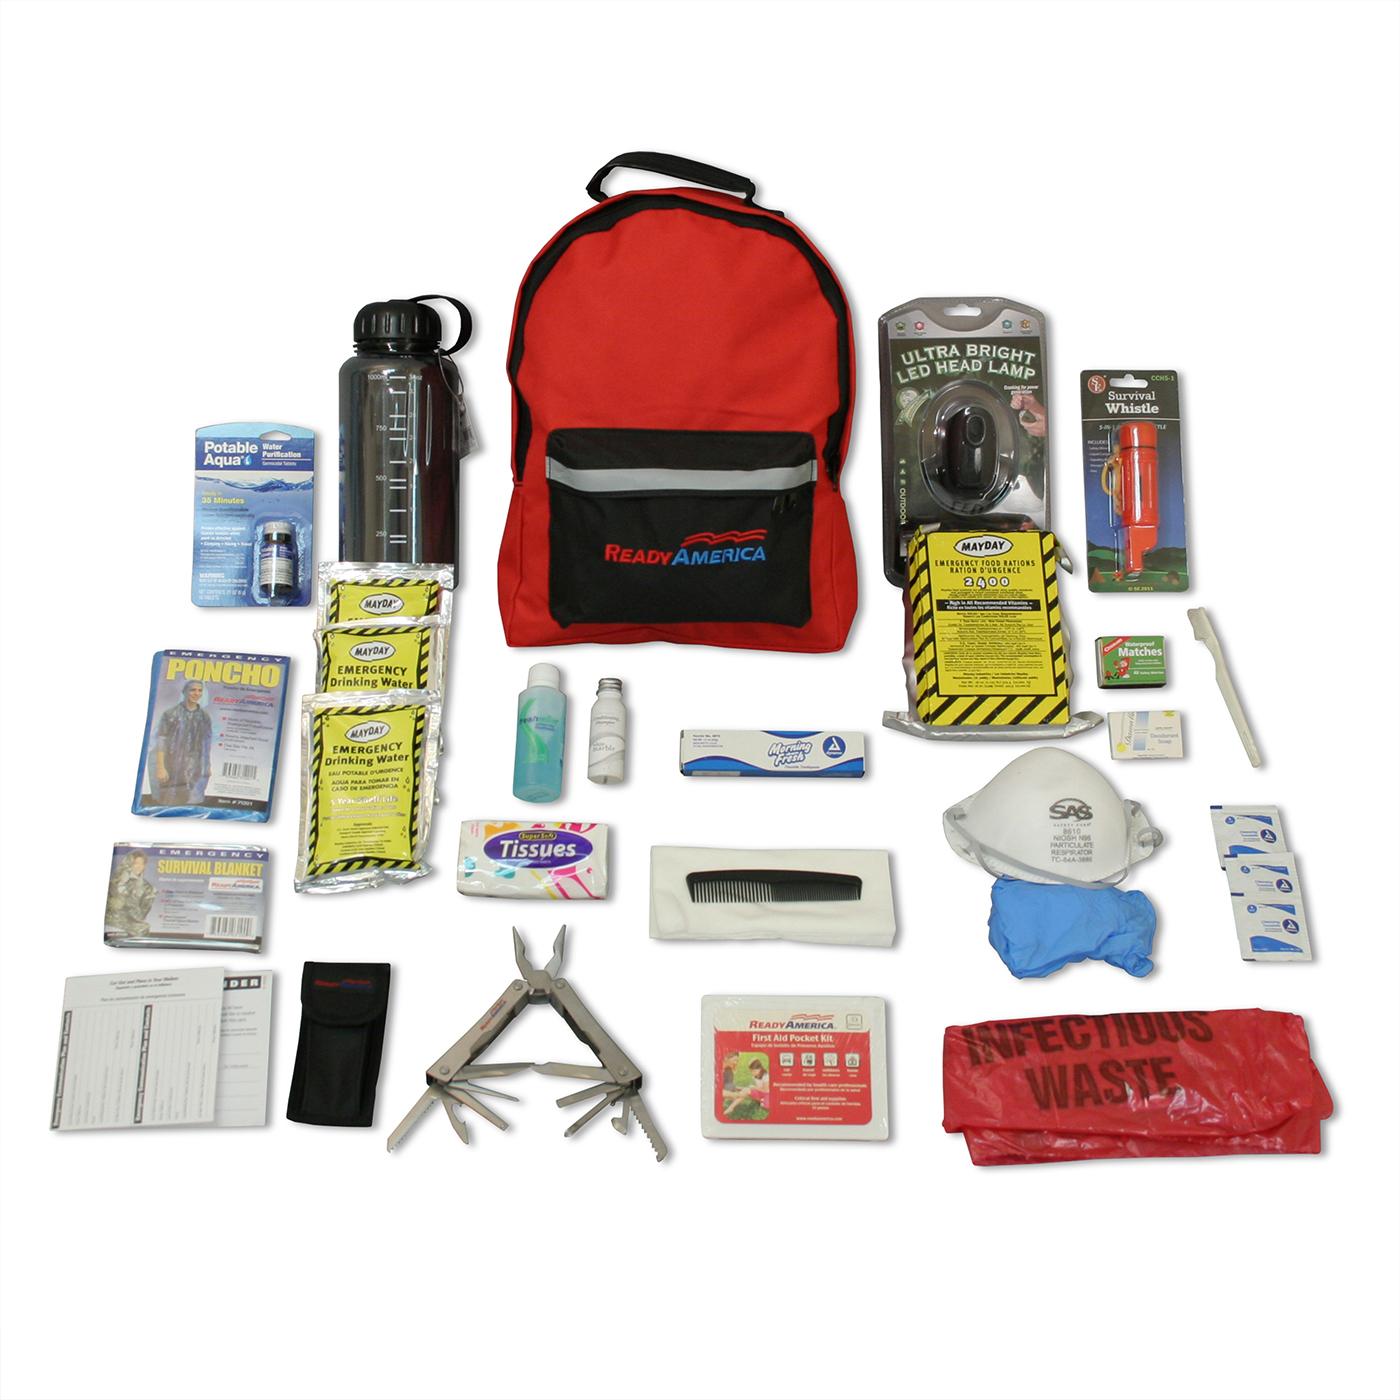 Standard Road Warrior Car Emergency Kit